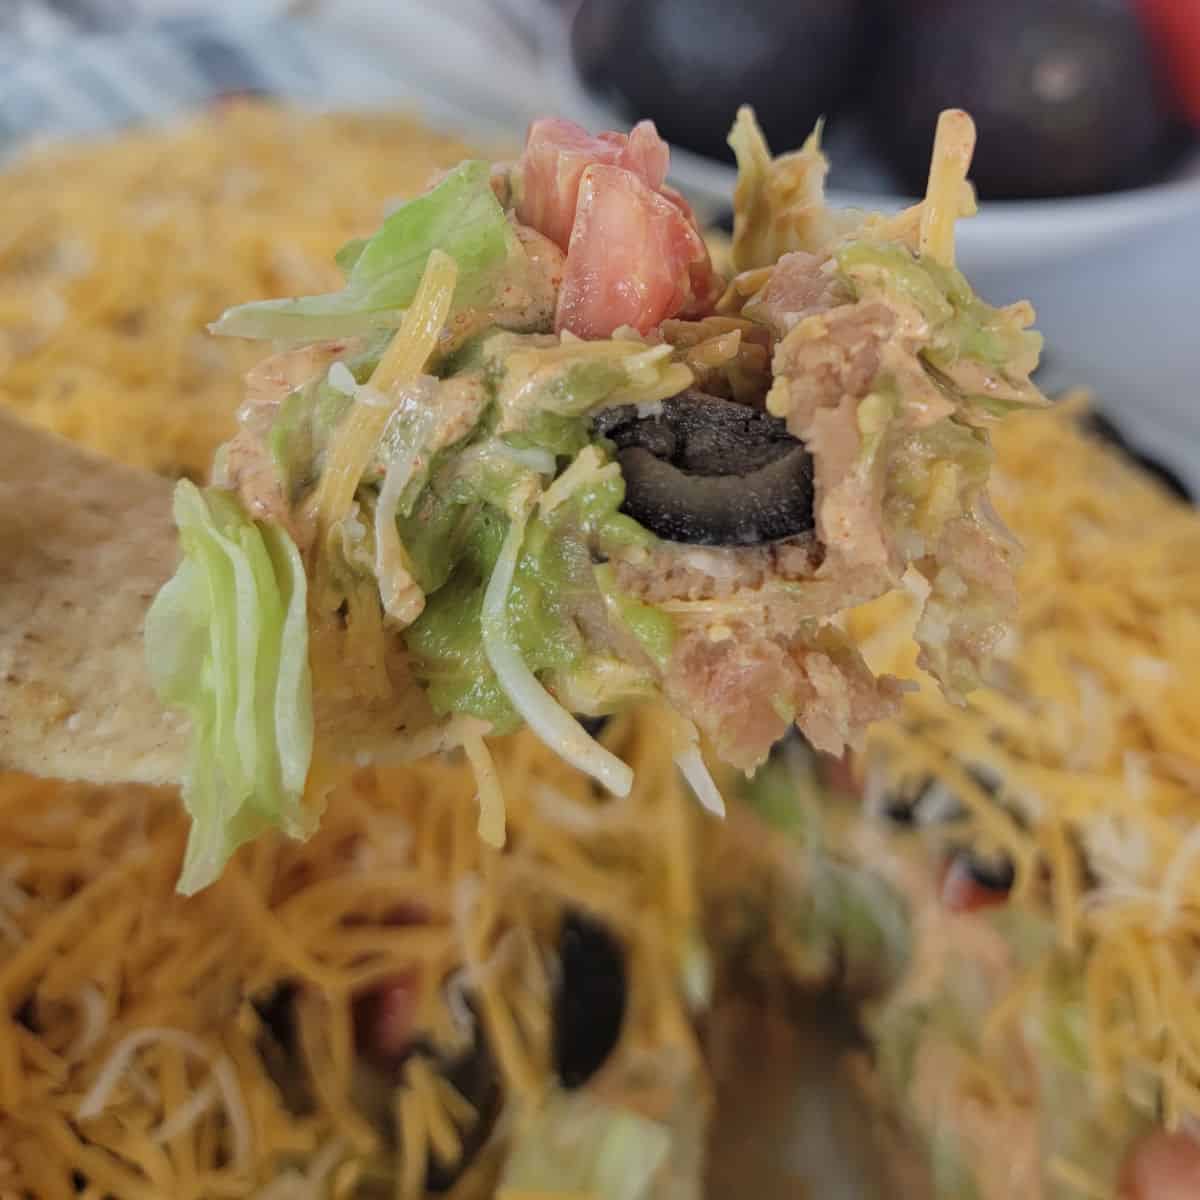 Tortilla holding 7 layer taco dip above a full casserole dish